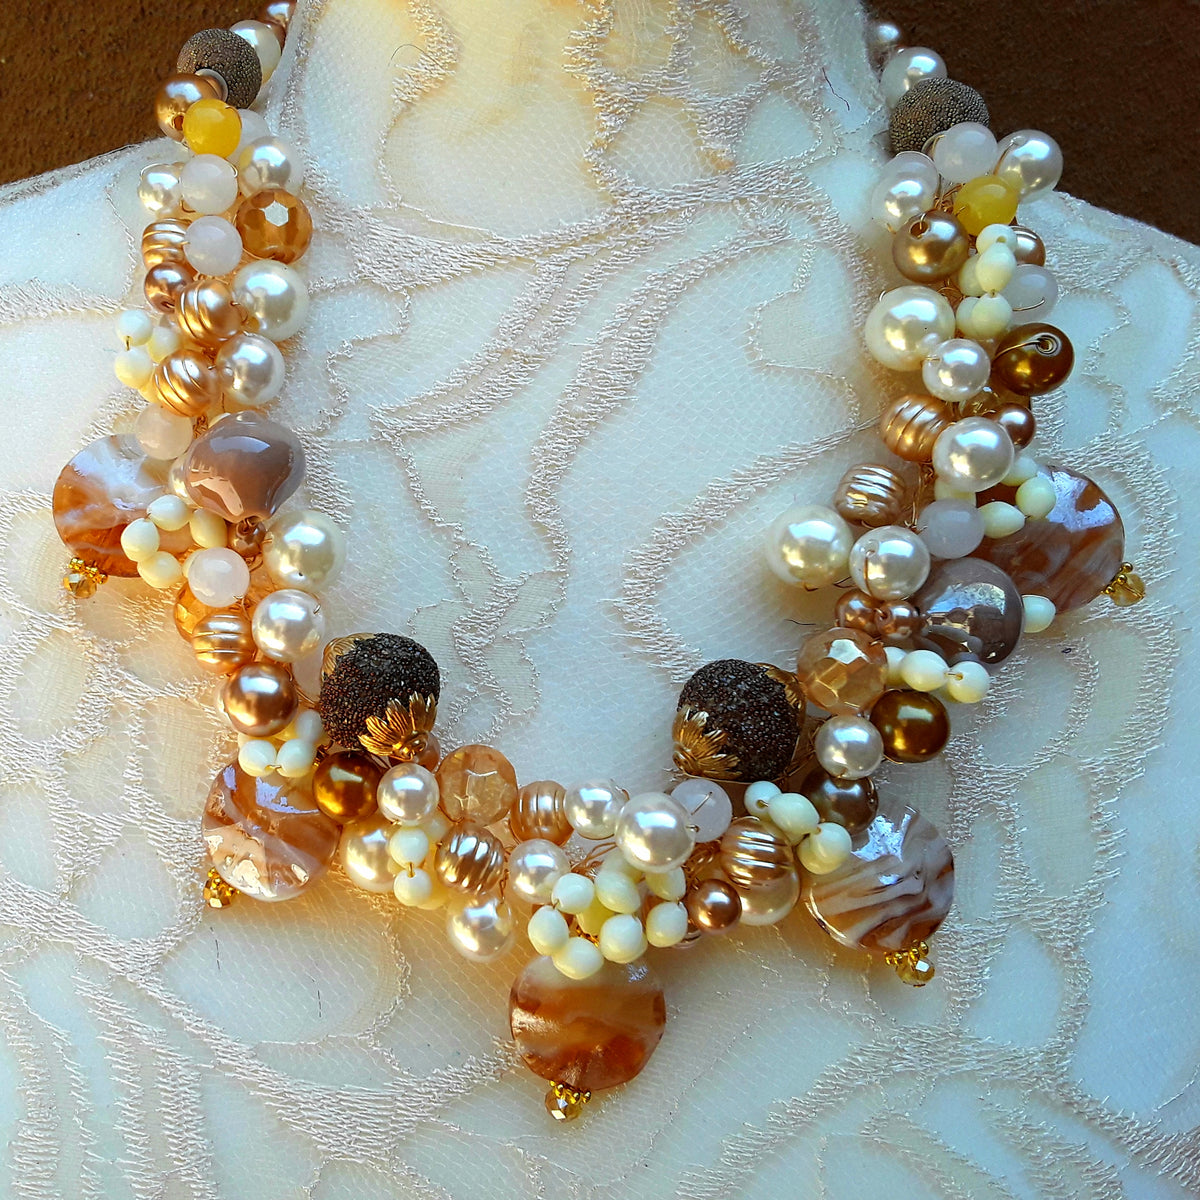 Unique Murano Glass & Pearl Bridal Statement Necklace, Pearl Artisan Cluster Collar